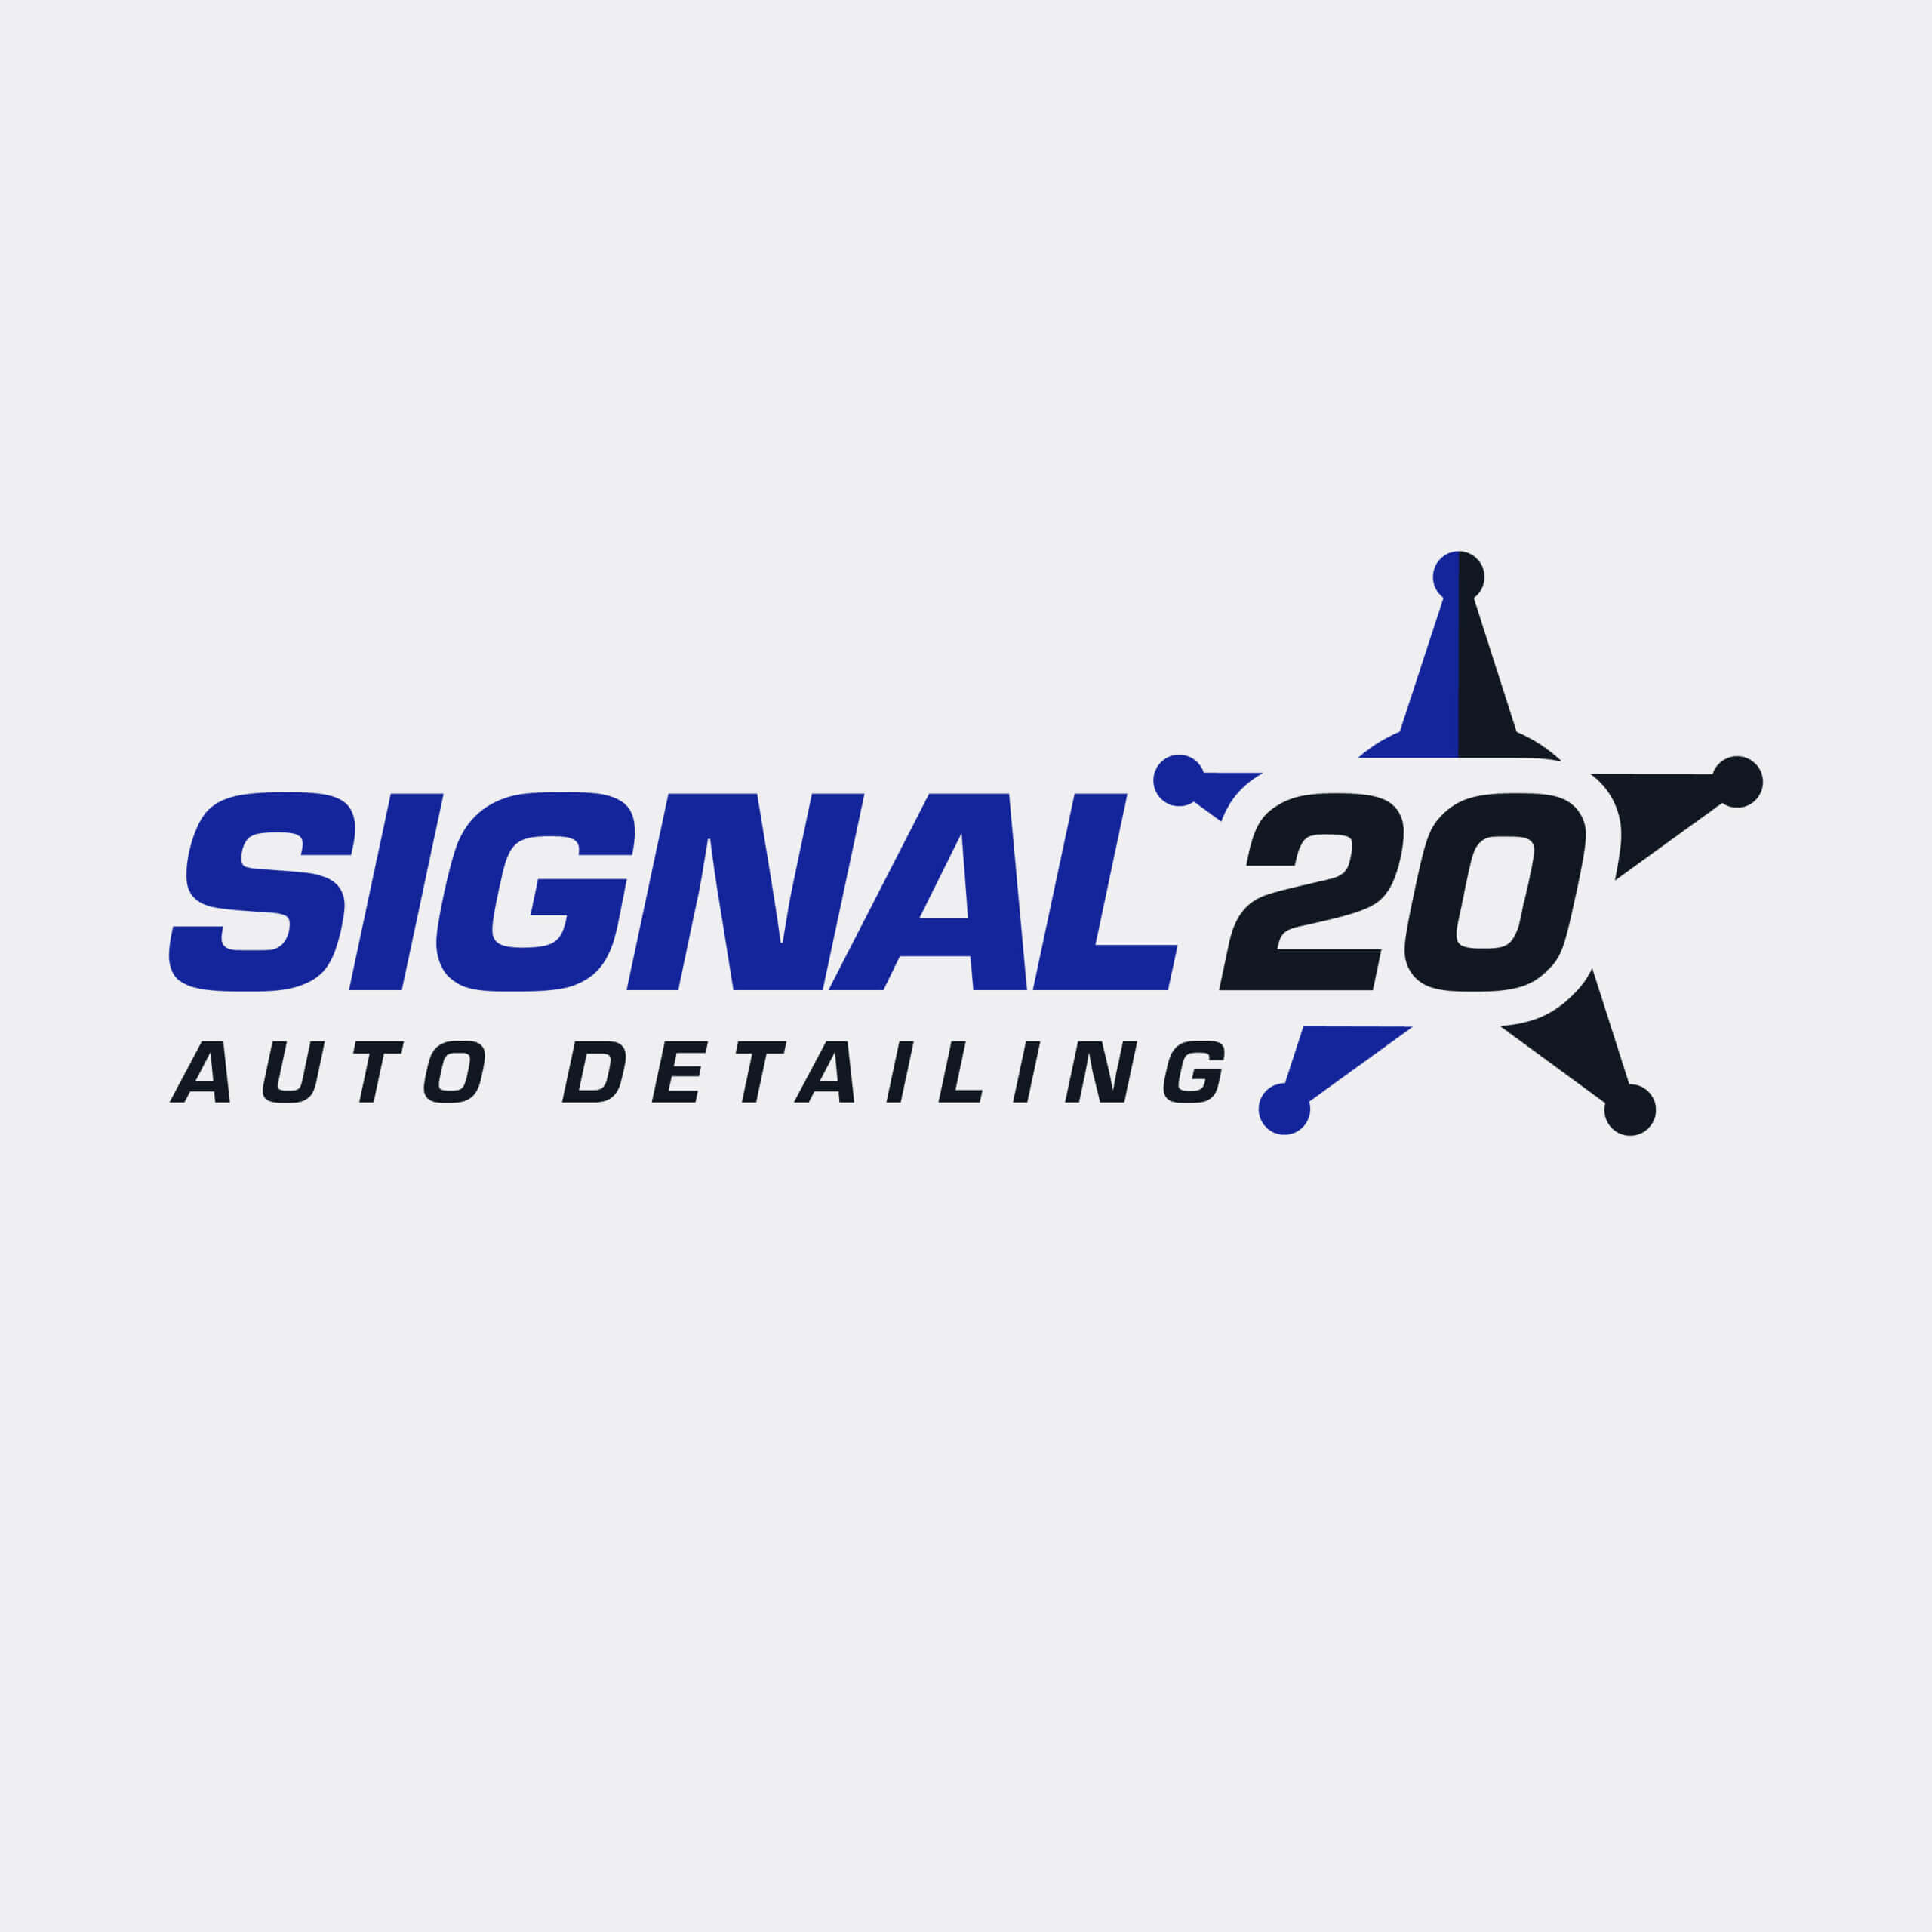 Signal 20